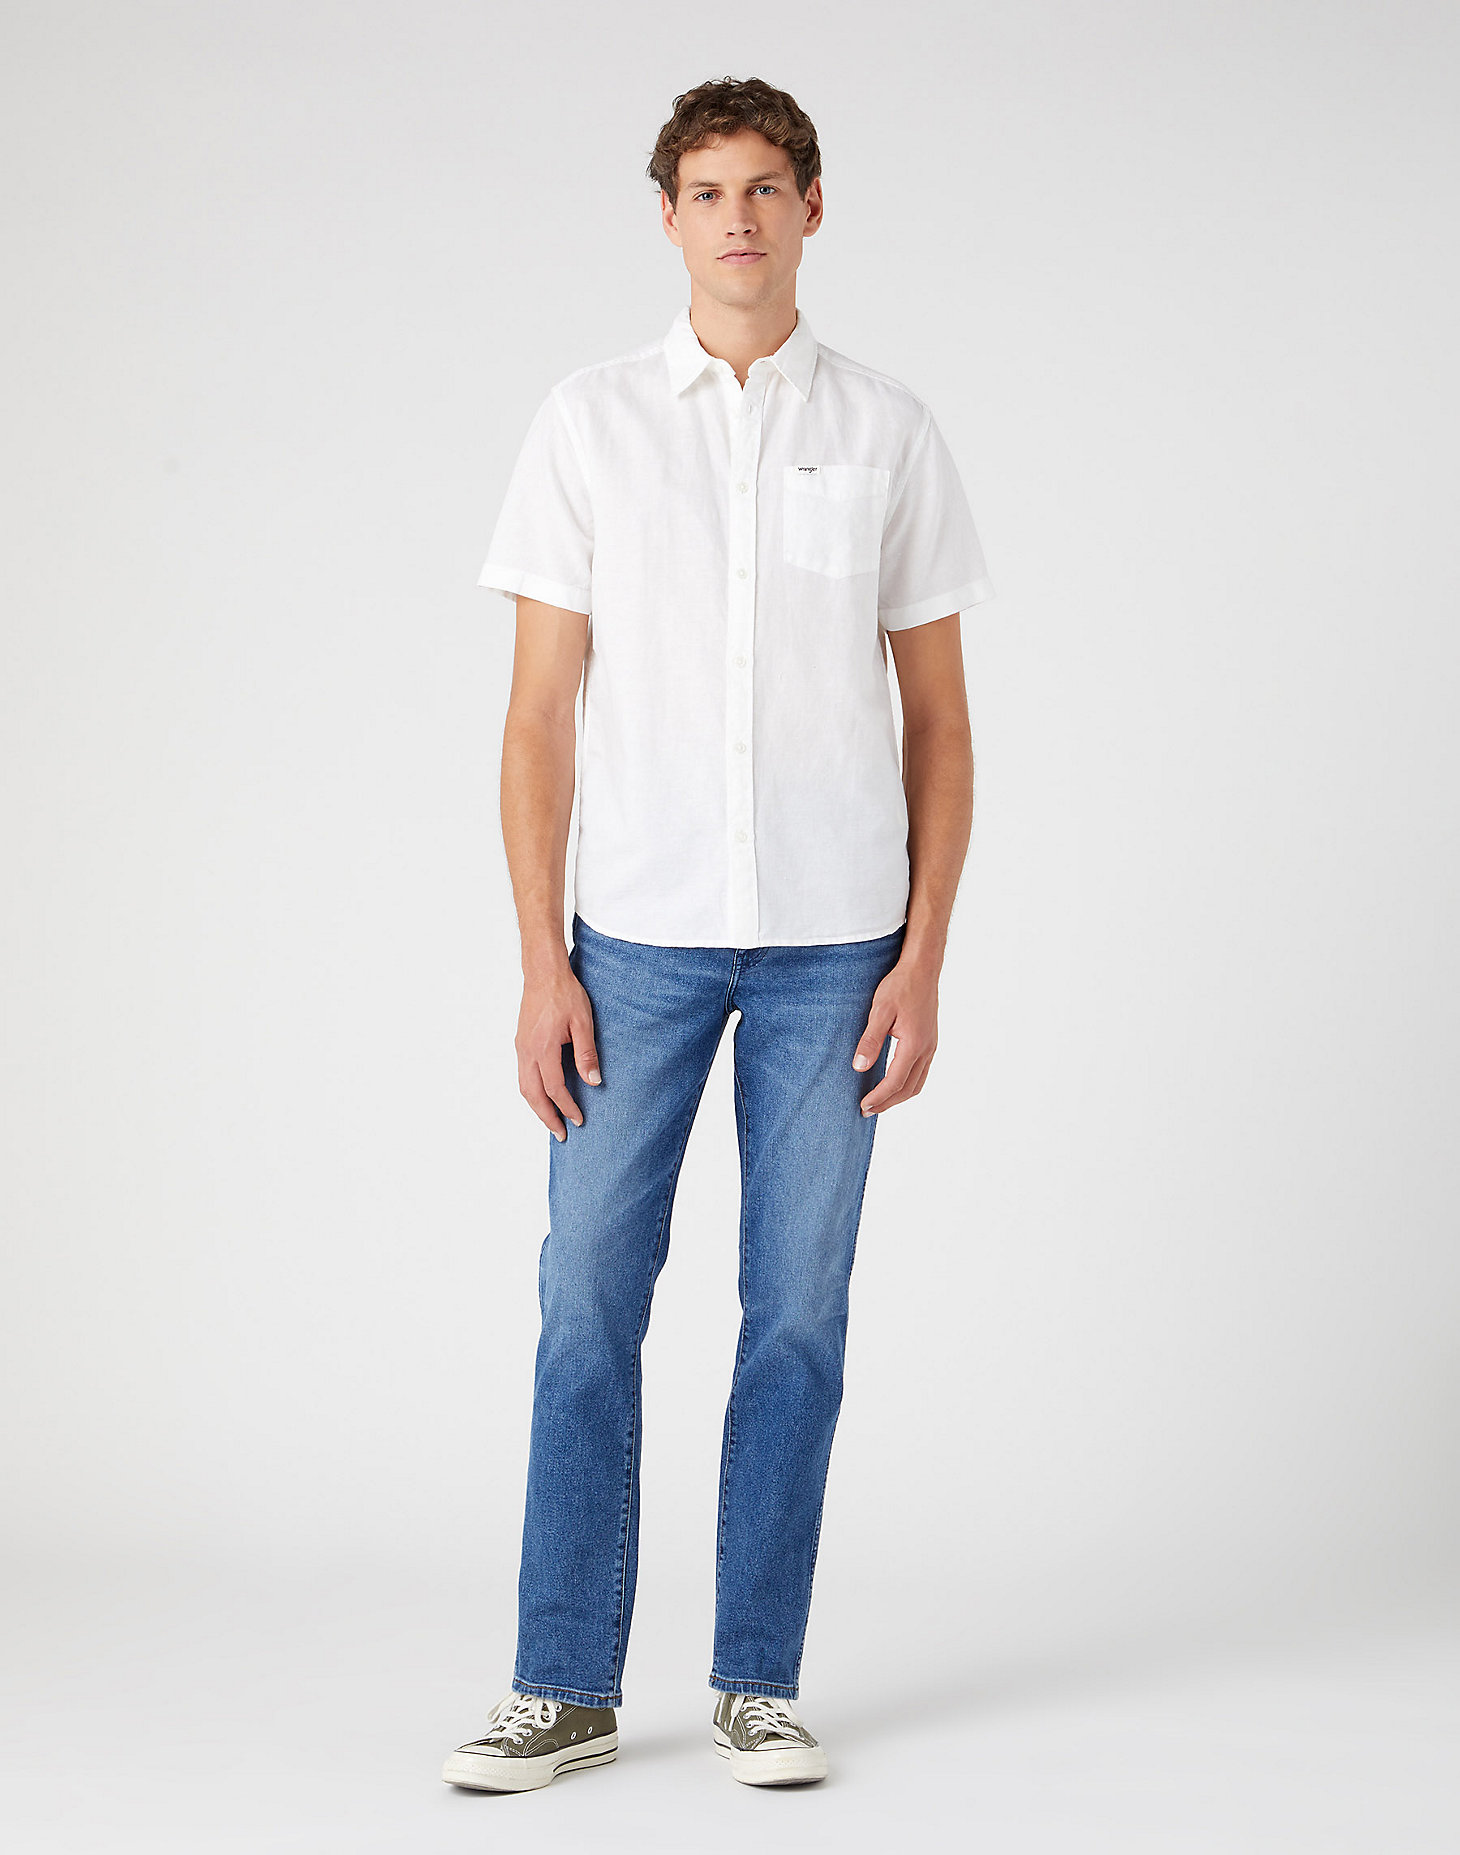 Short Sleeve 1 Pocket Shirt in White alternative view 1